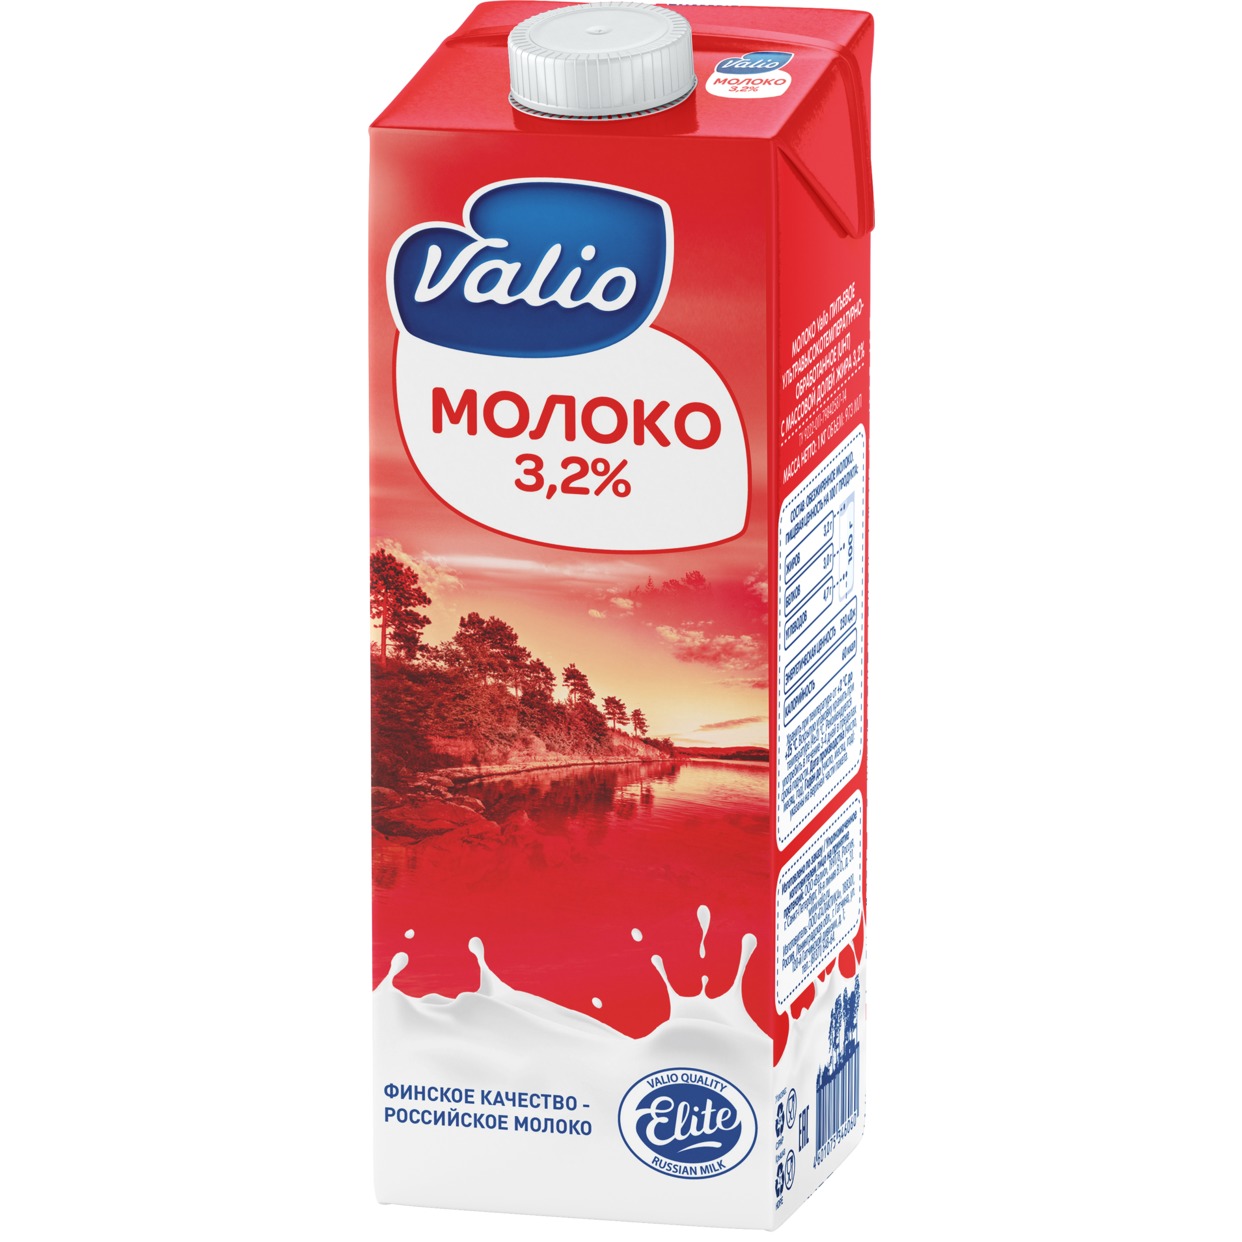 VALIO Молоко UHT 3,2% 1кг по акции в Пятерочке